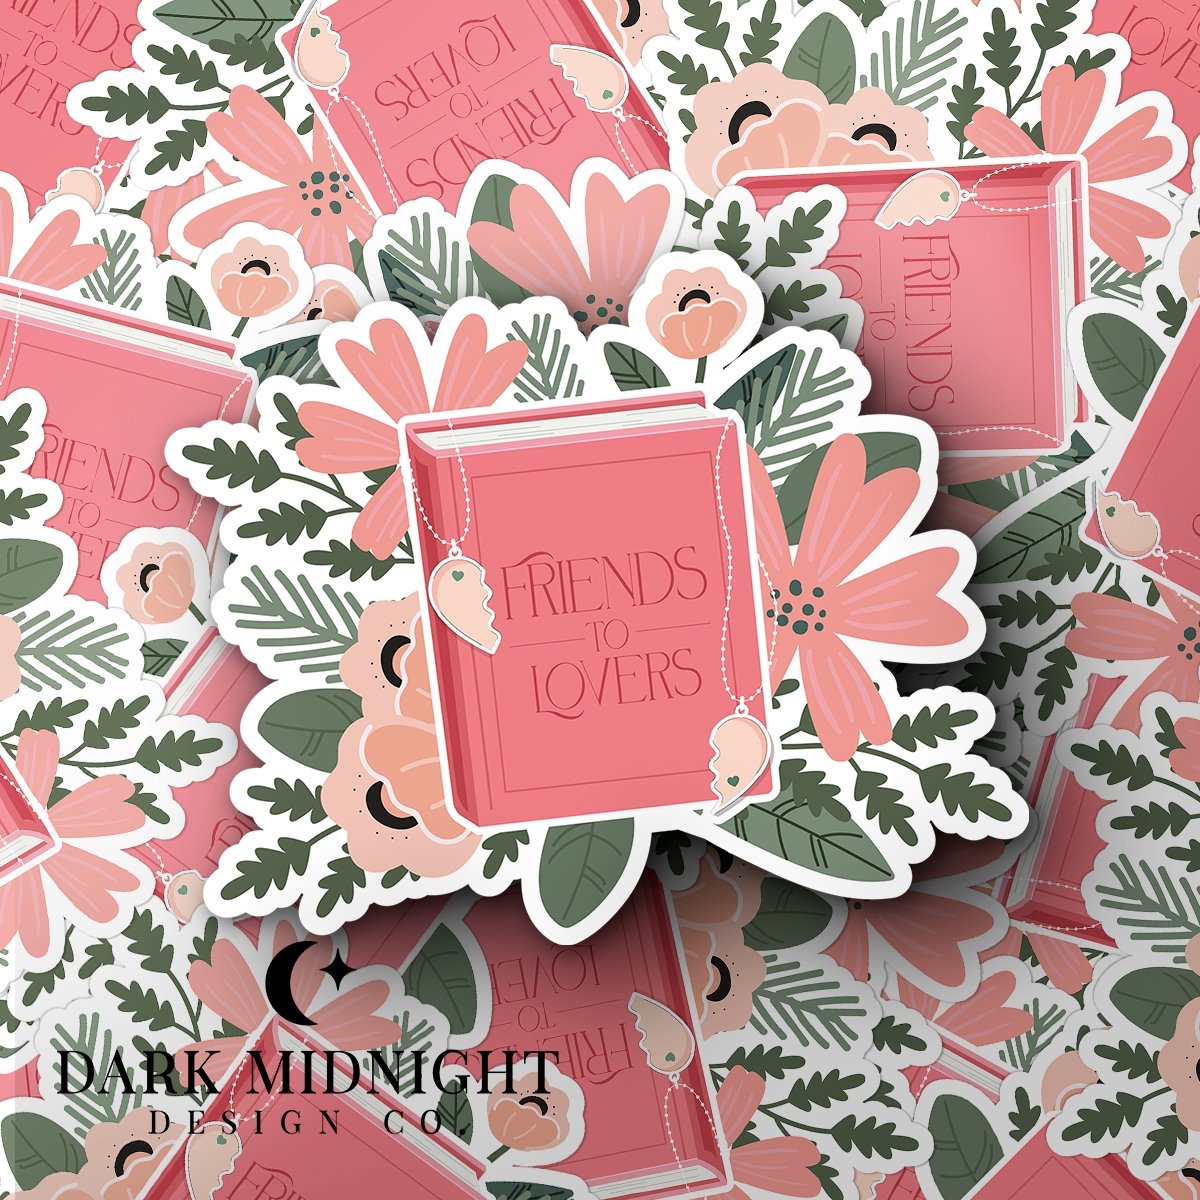 Friends to Lovers - Floral Book Tropes Sticker - Dark Midnight Design Co